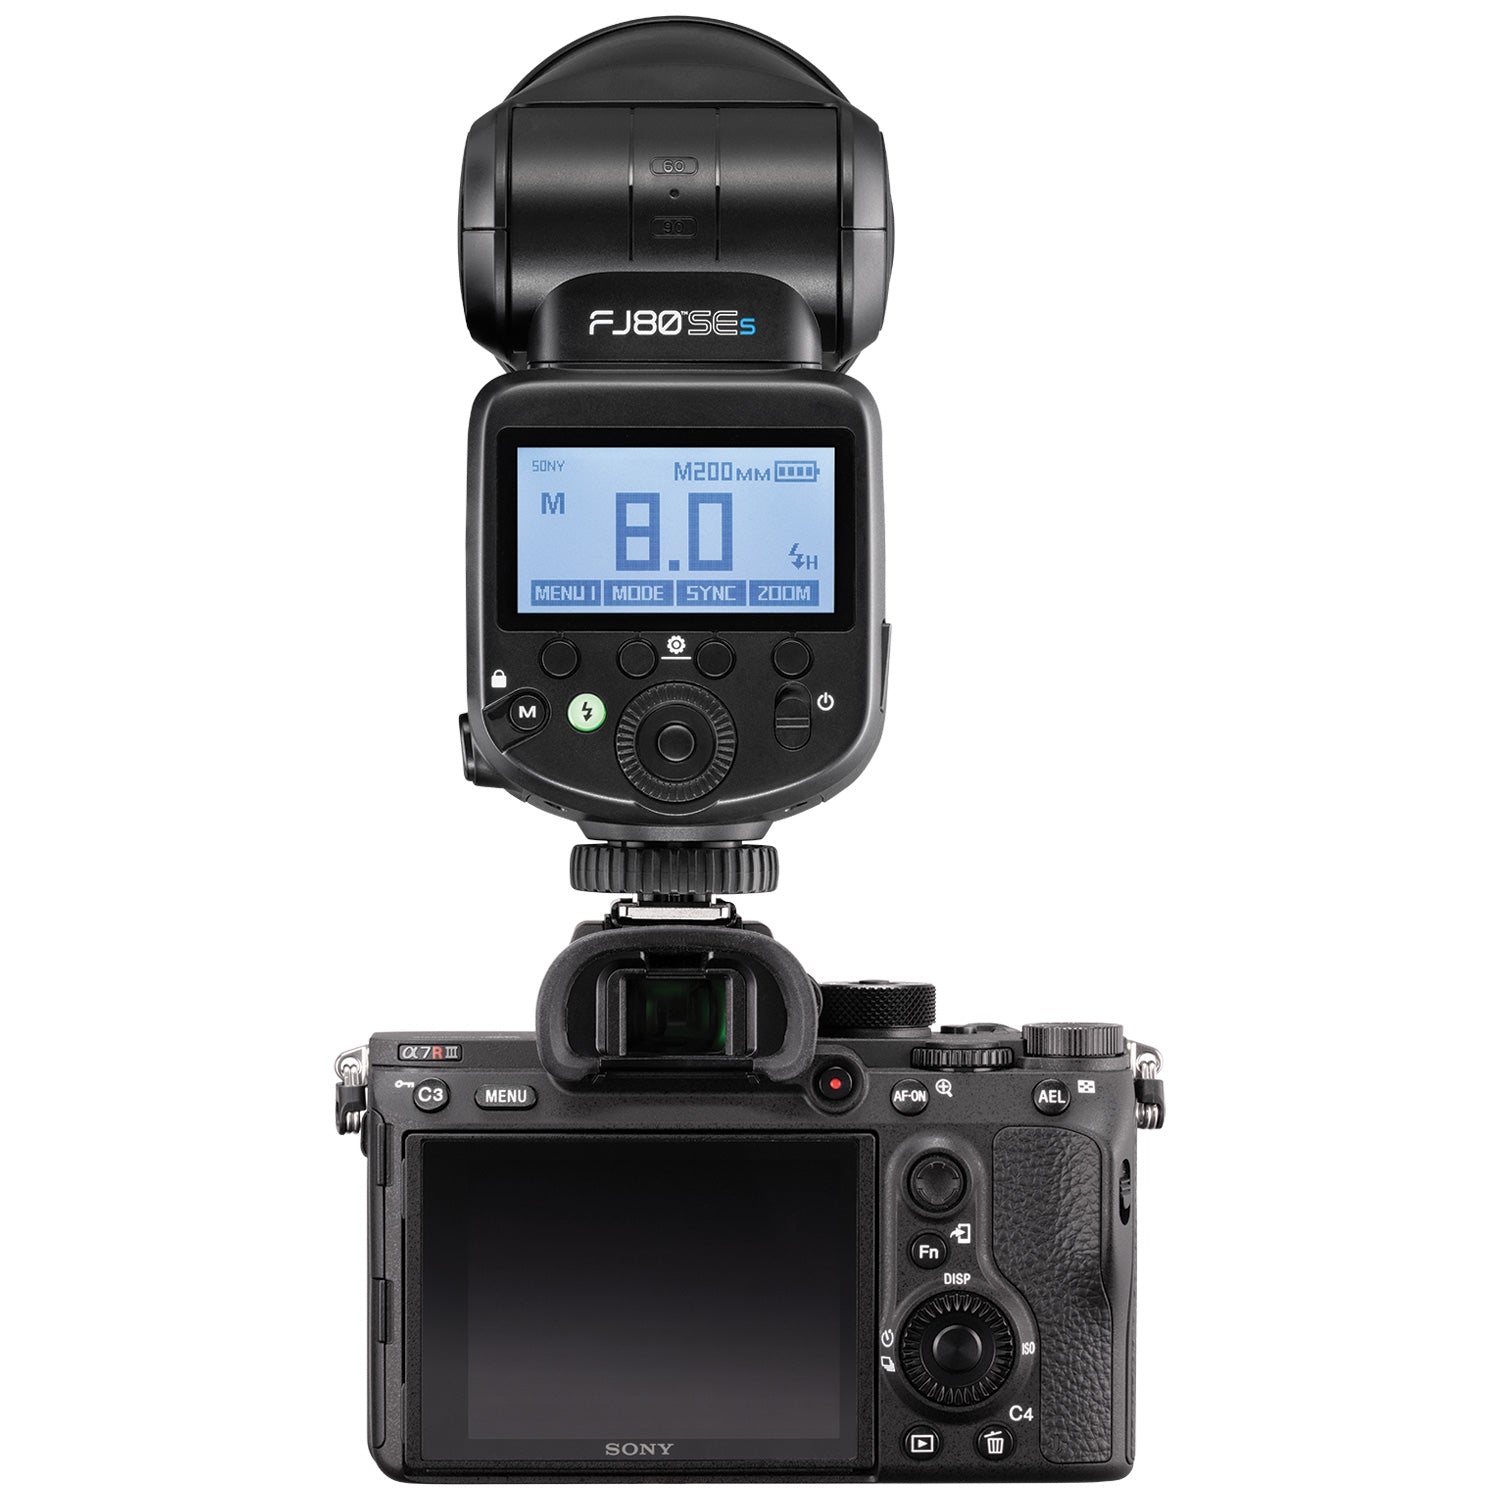 FJ80-SE S 80Ws Speedlight for Sony Cameras